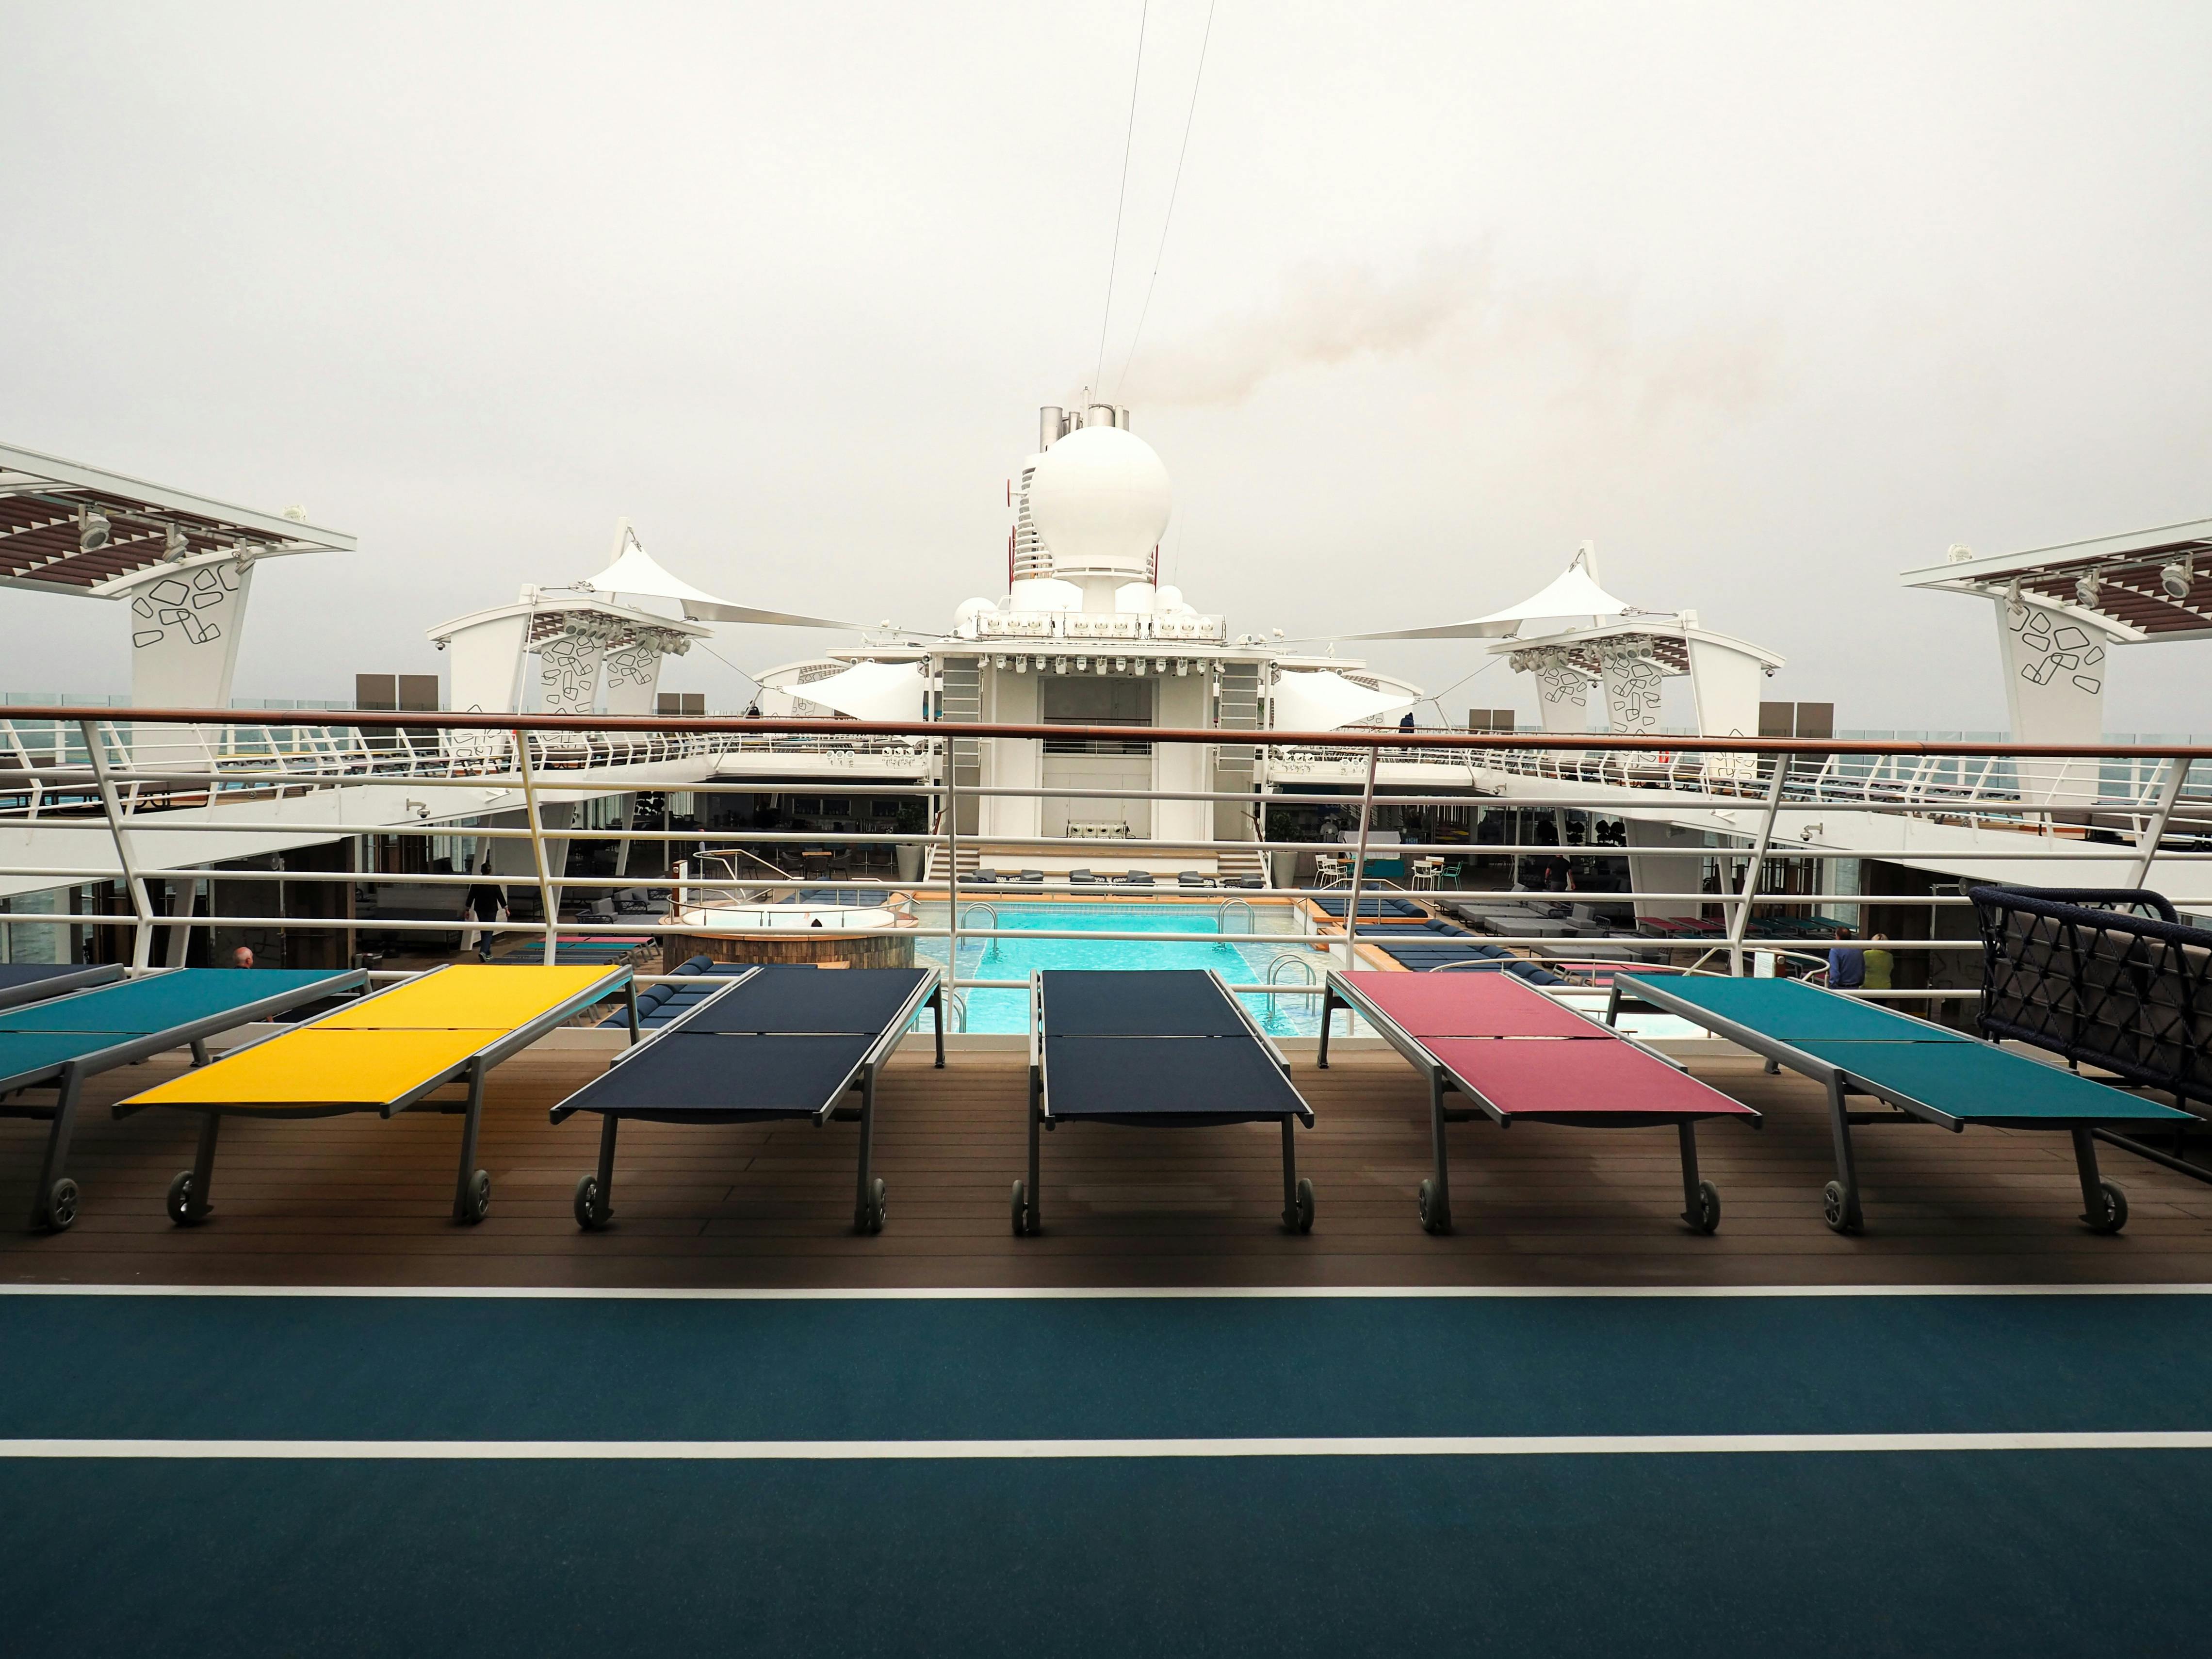 Free stock photo of cruise ship, lay flat, swimming pool